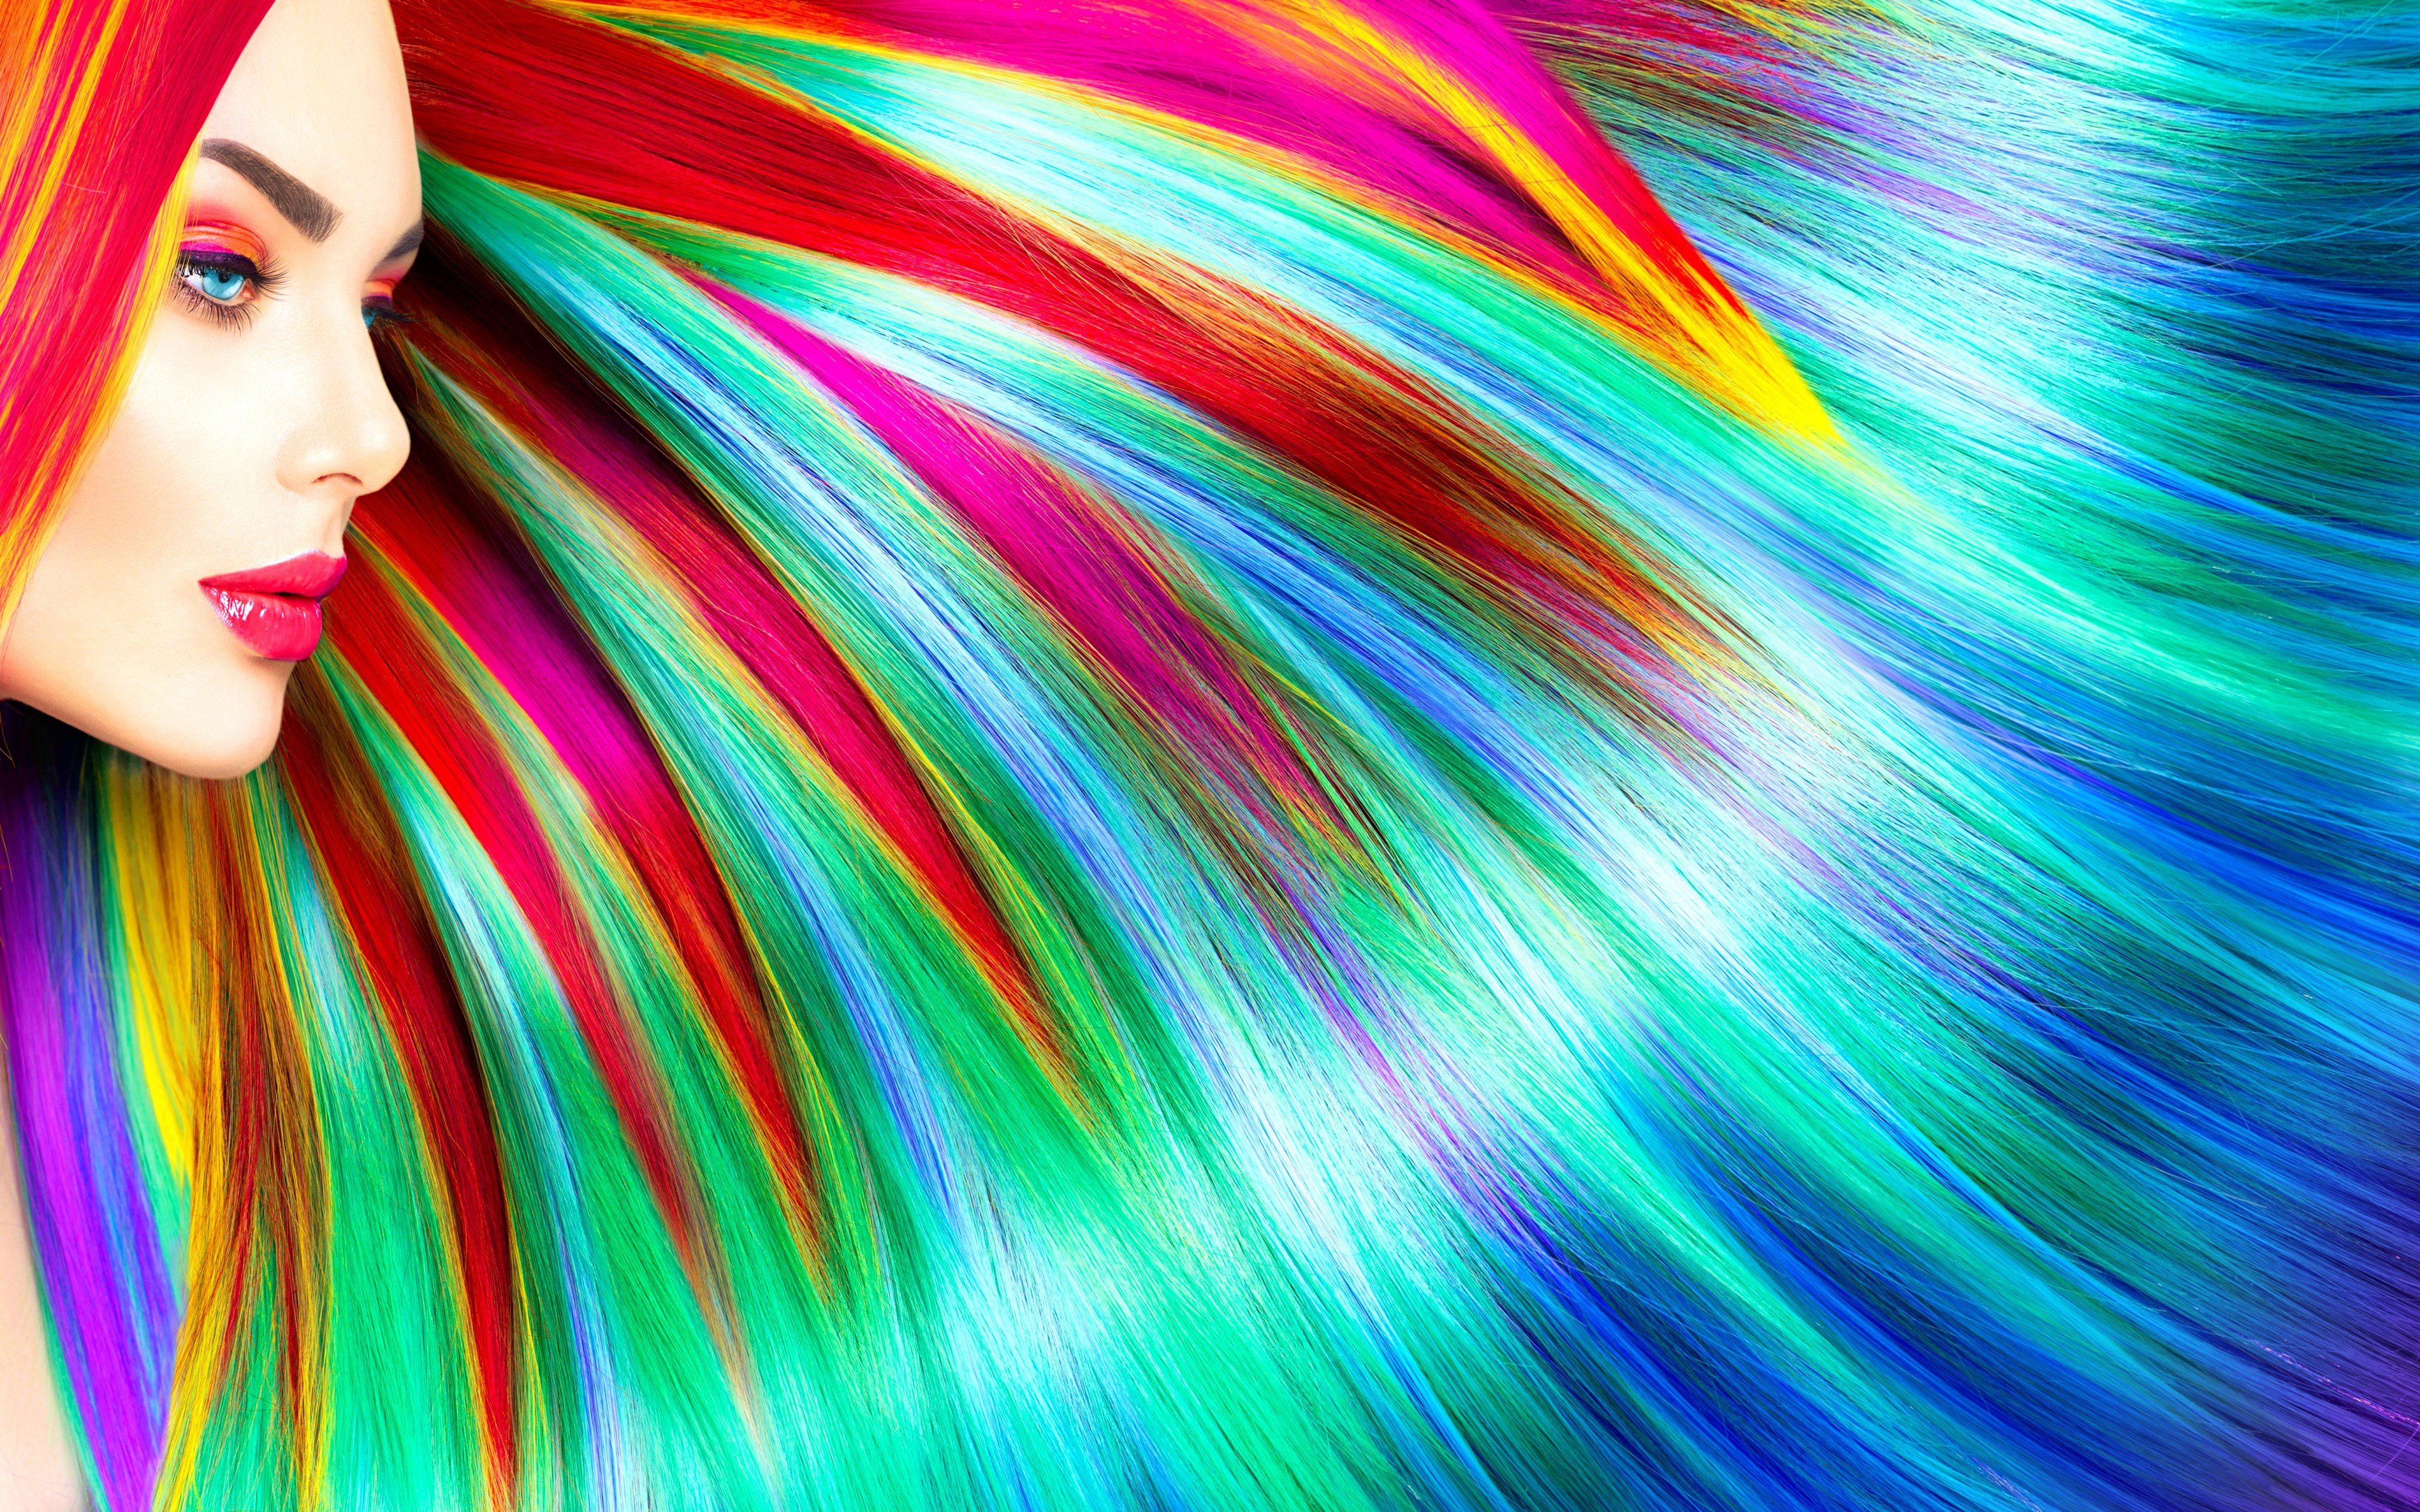 Fondos de pantalla Mujer con cabello de colores del arcoiris